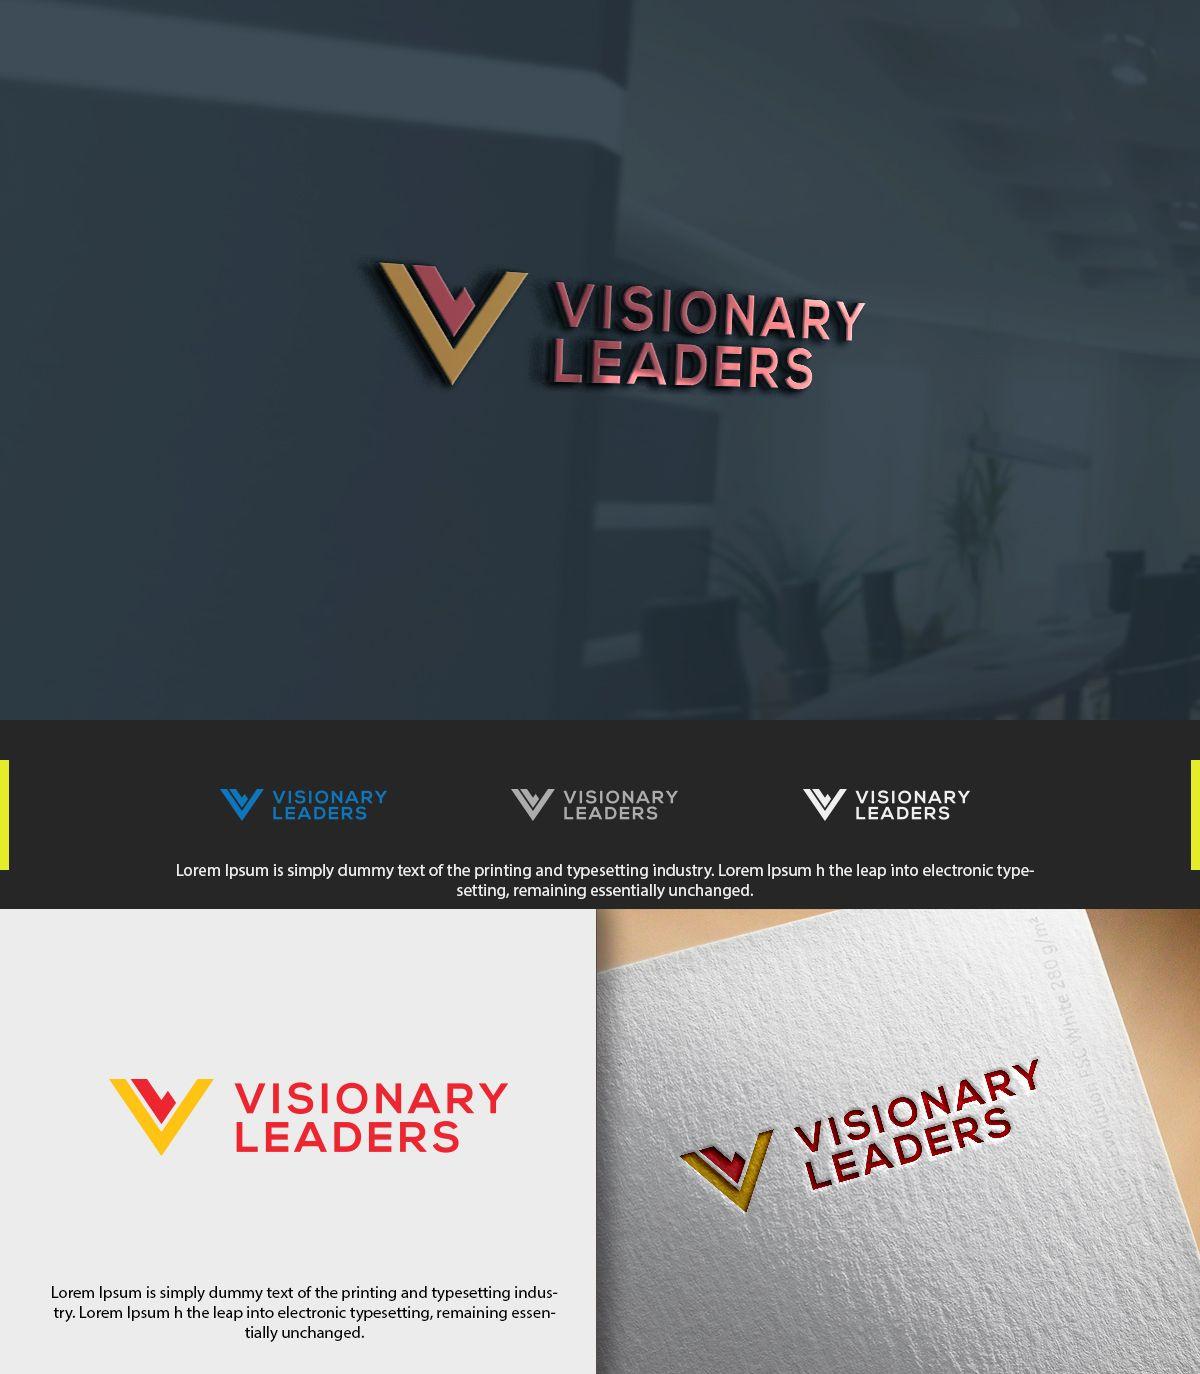 Company with VL Logo - Upmarket, Serious, Business Management Logo Design for VL Visionary ...